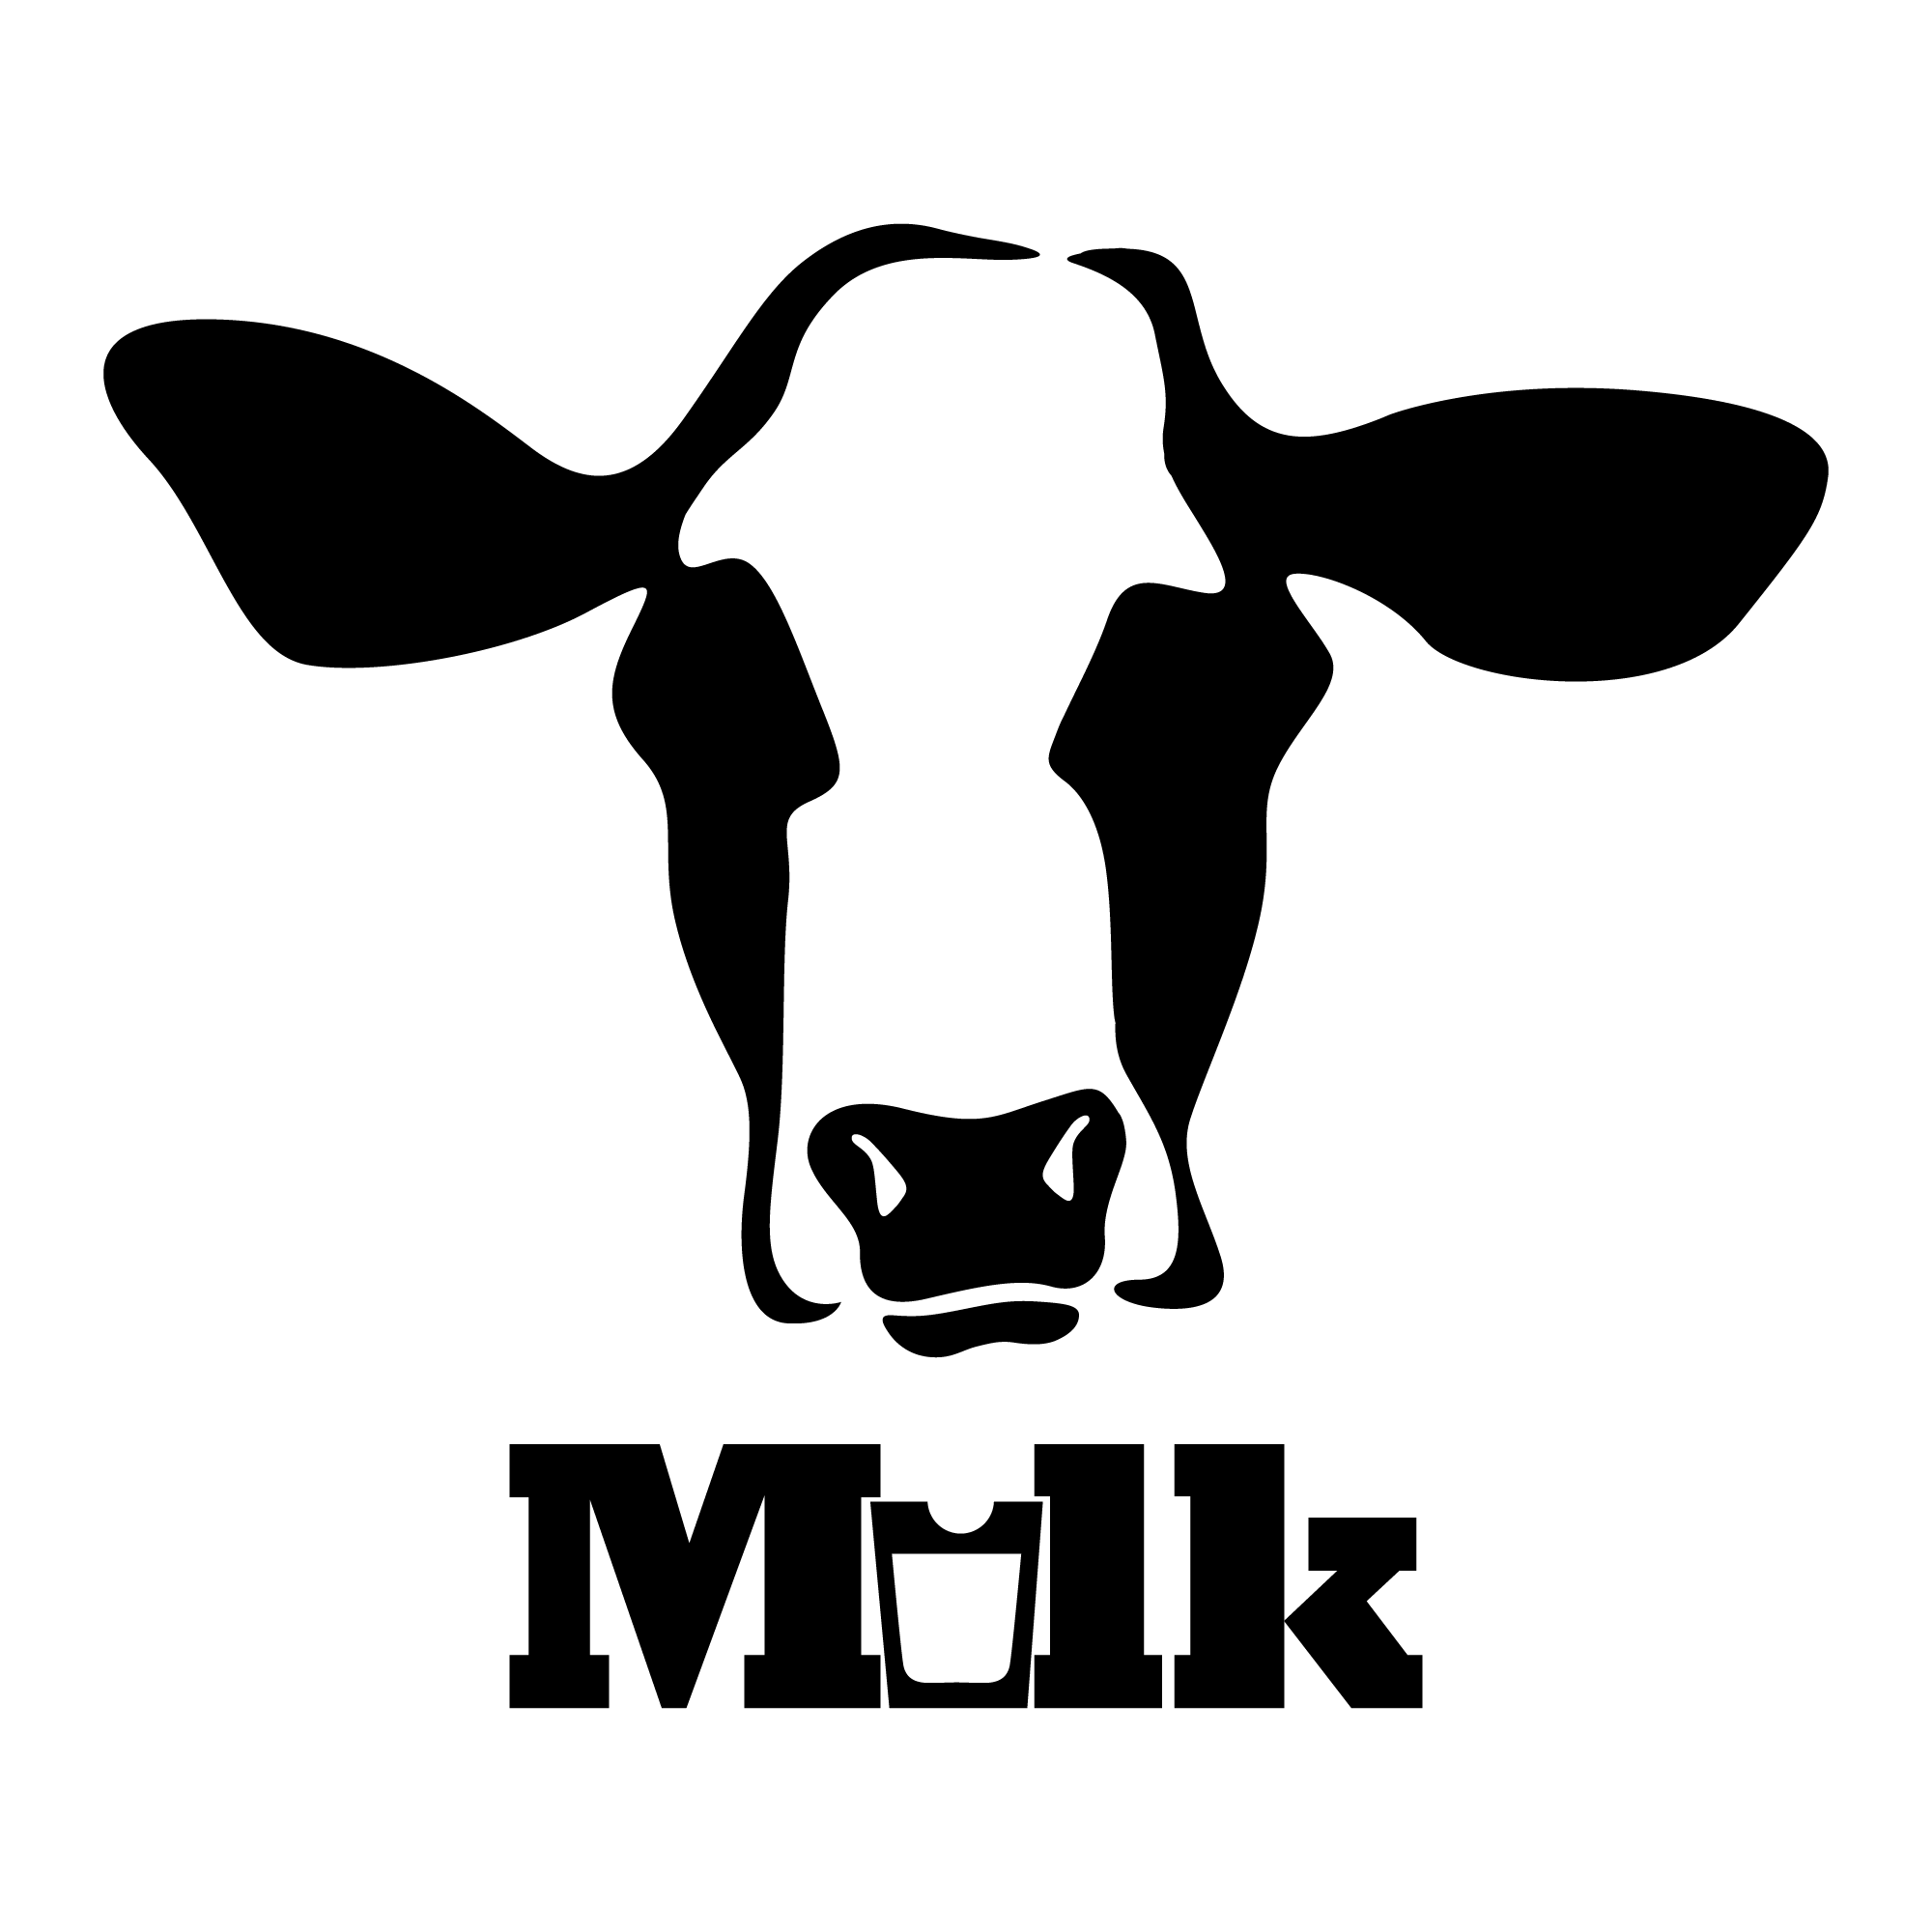 Black and White Cow Logo - Dairy Cow Logos - ImageStack | Craft Ideas | Cow logo, Logos, Cow